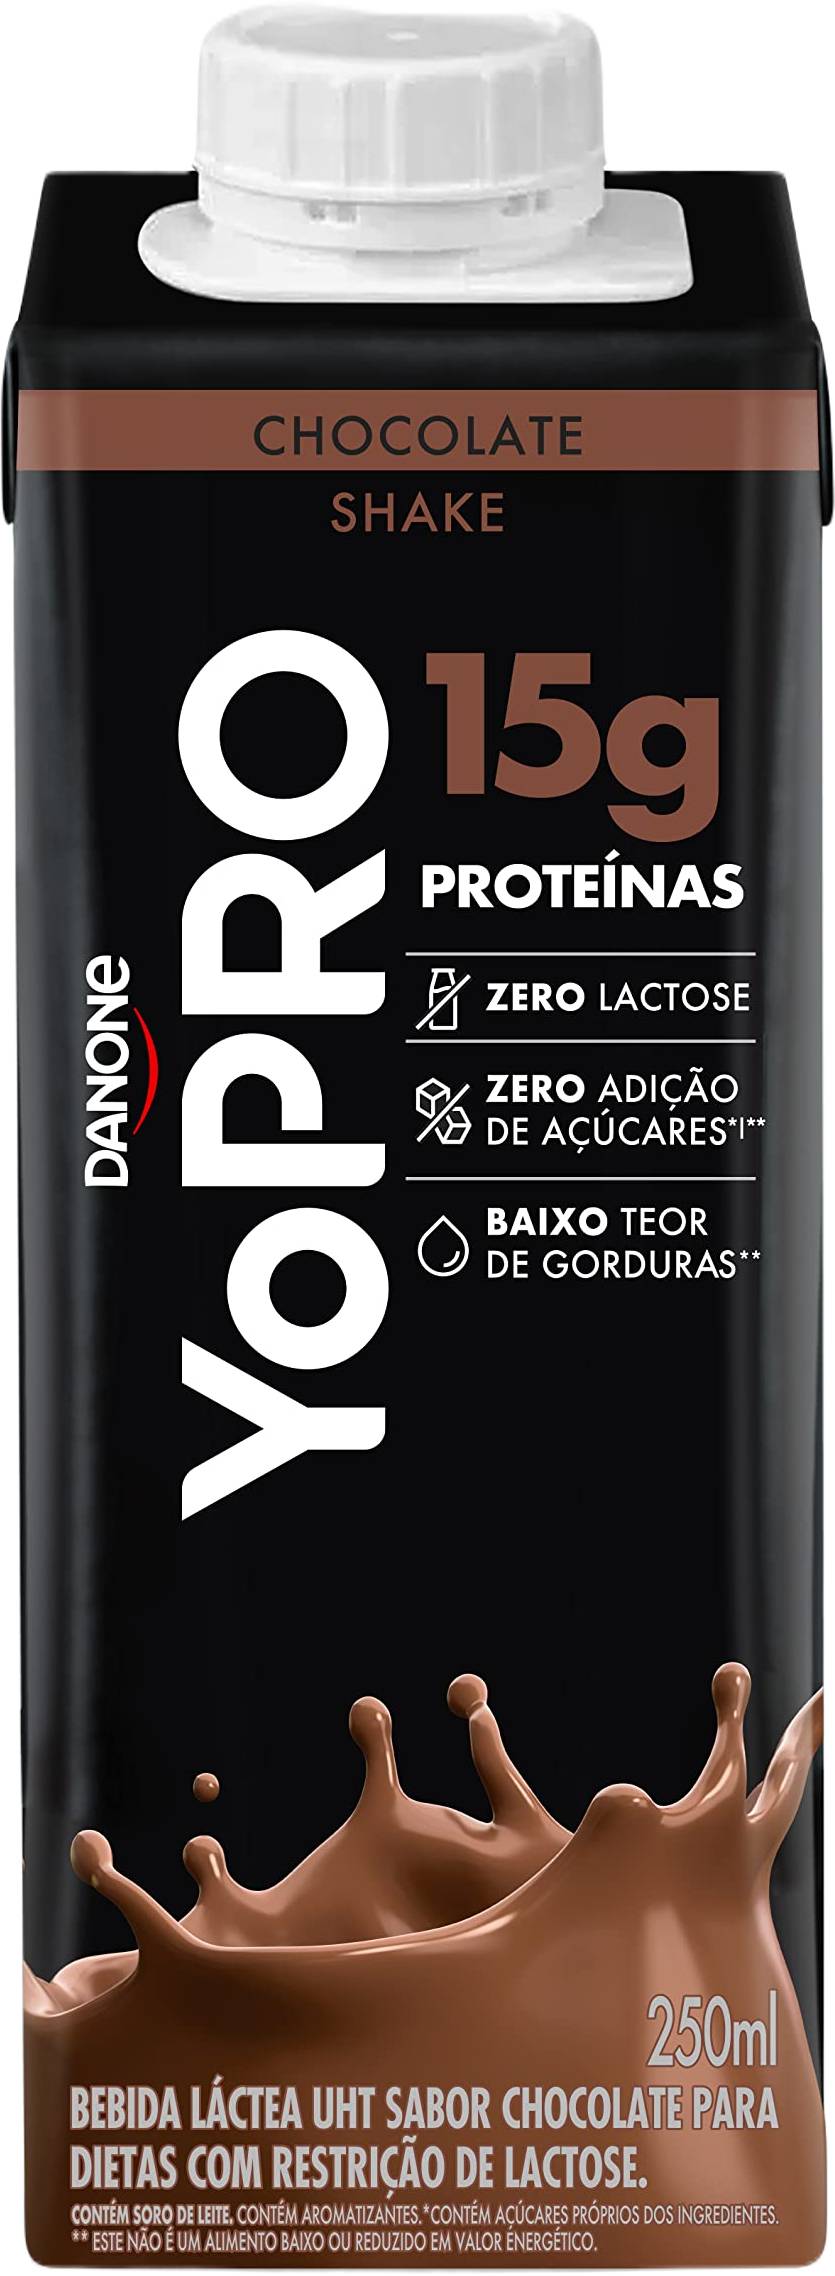 Yopro bebida láctea uht sabor chocolate 15g proteínas (250 ml)